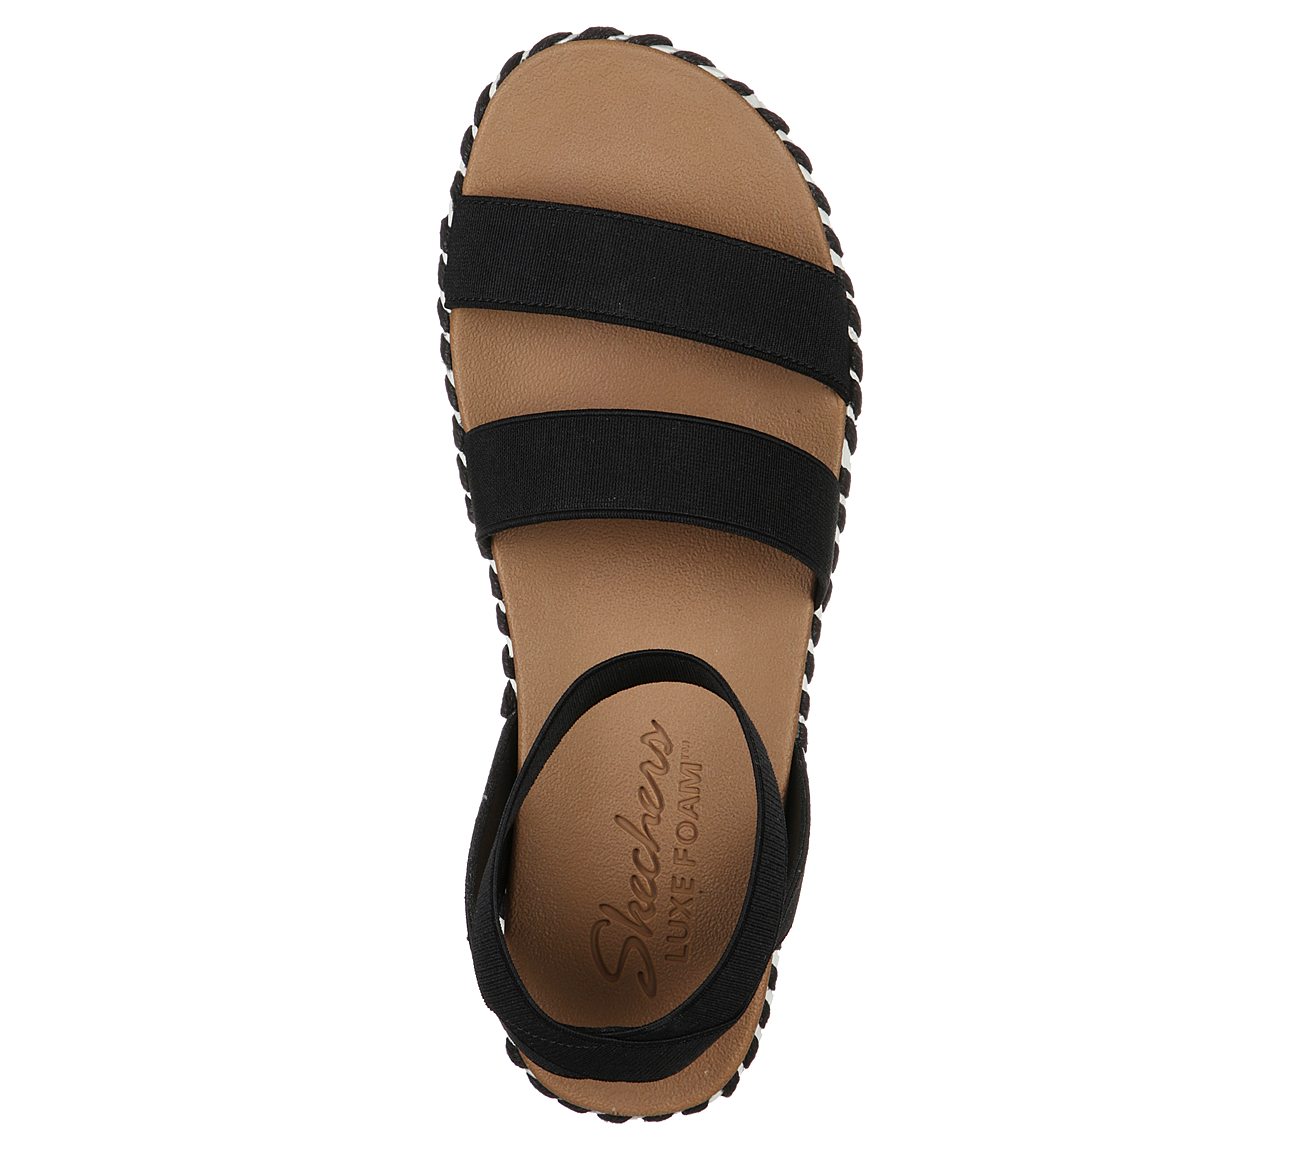 skechers luxe sandals,cheap - OFF 69%